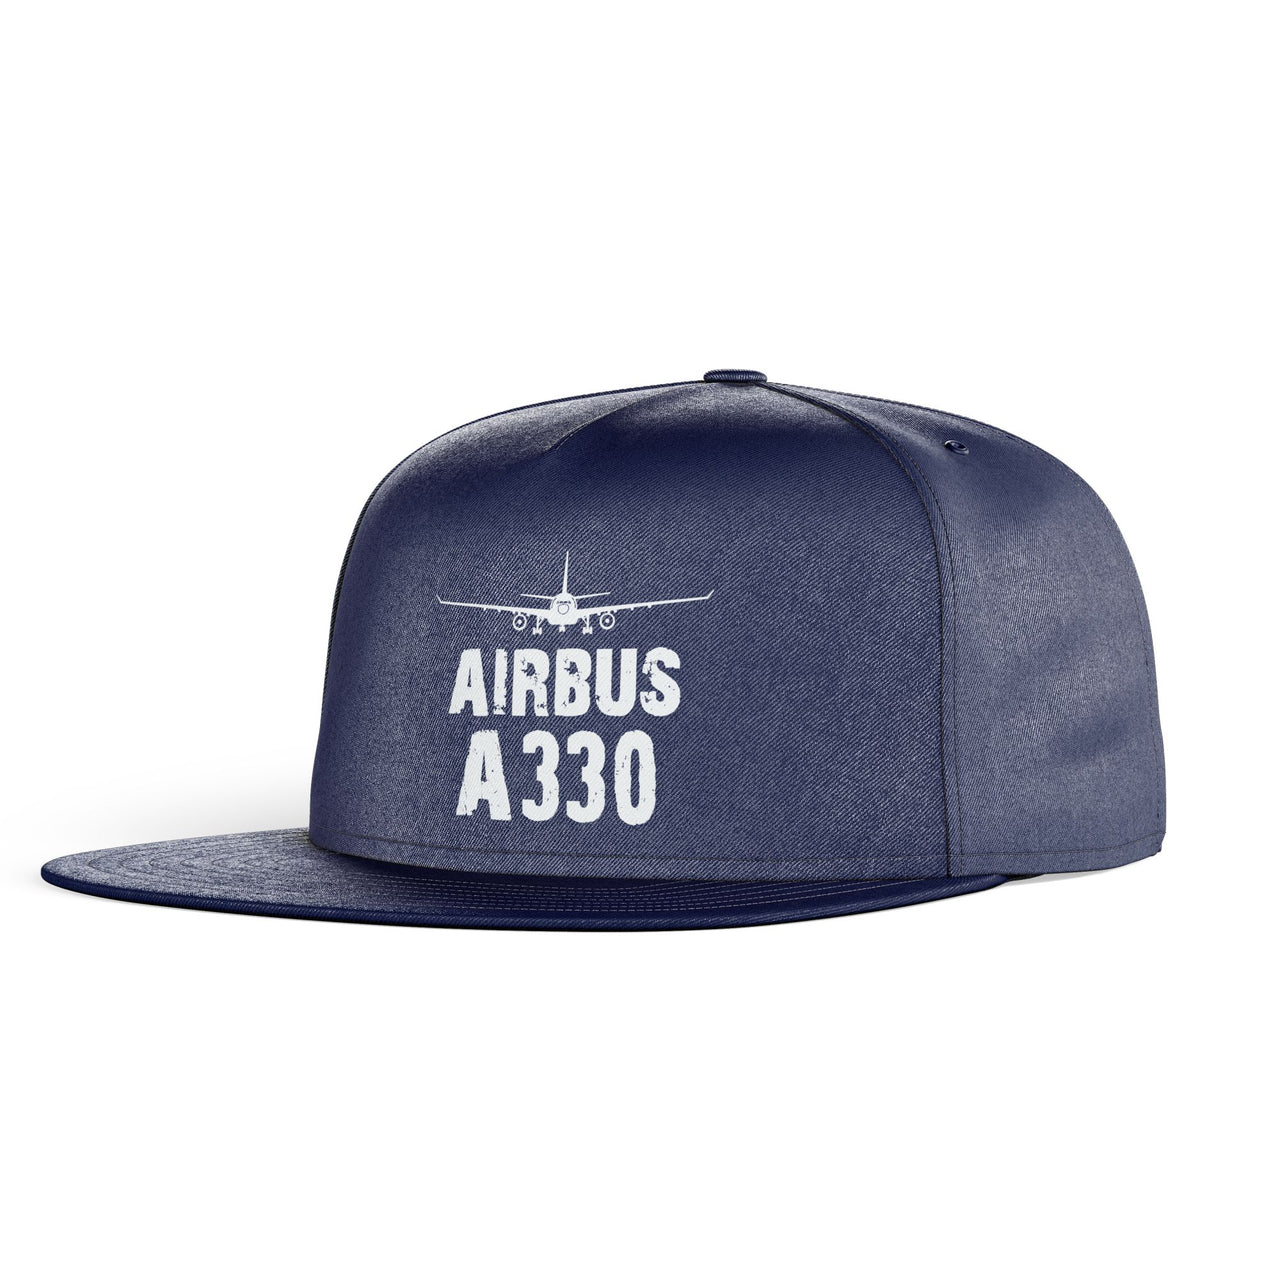 Airbus A330 & Plane Designed Snapback Caps & Hats